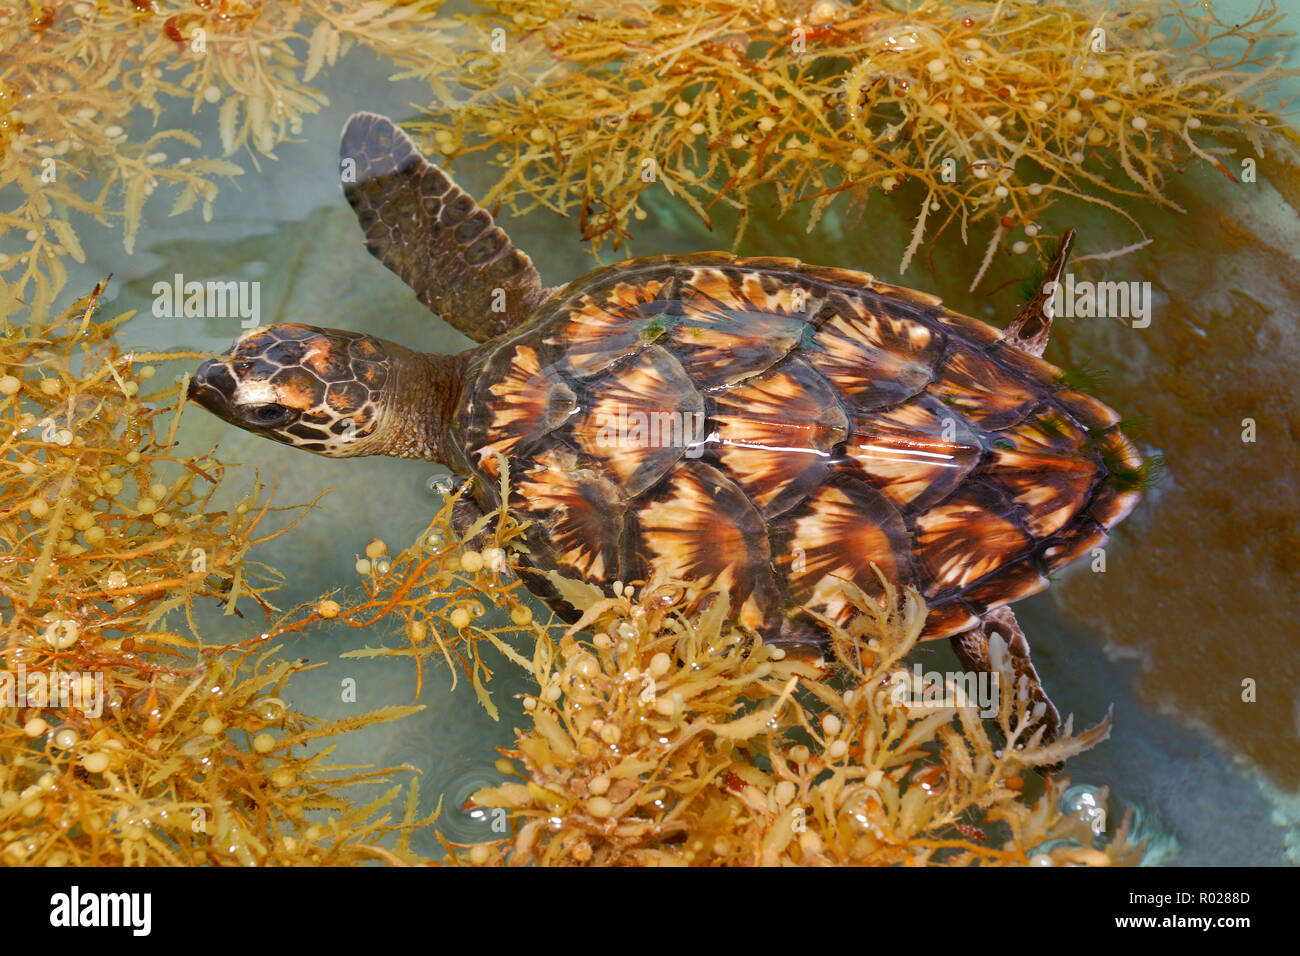 Hawskbill sea turtle, Eretmochelys imbricata, juvenile, Florida (c) B1275 Stock Photo